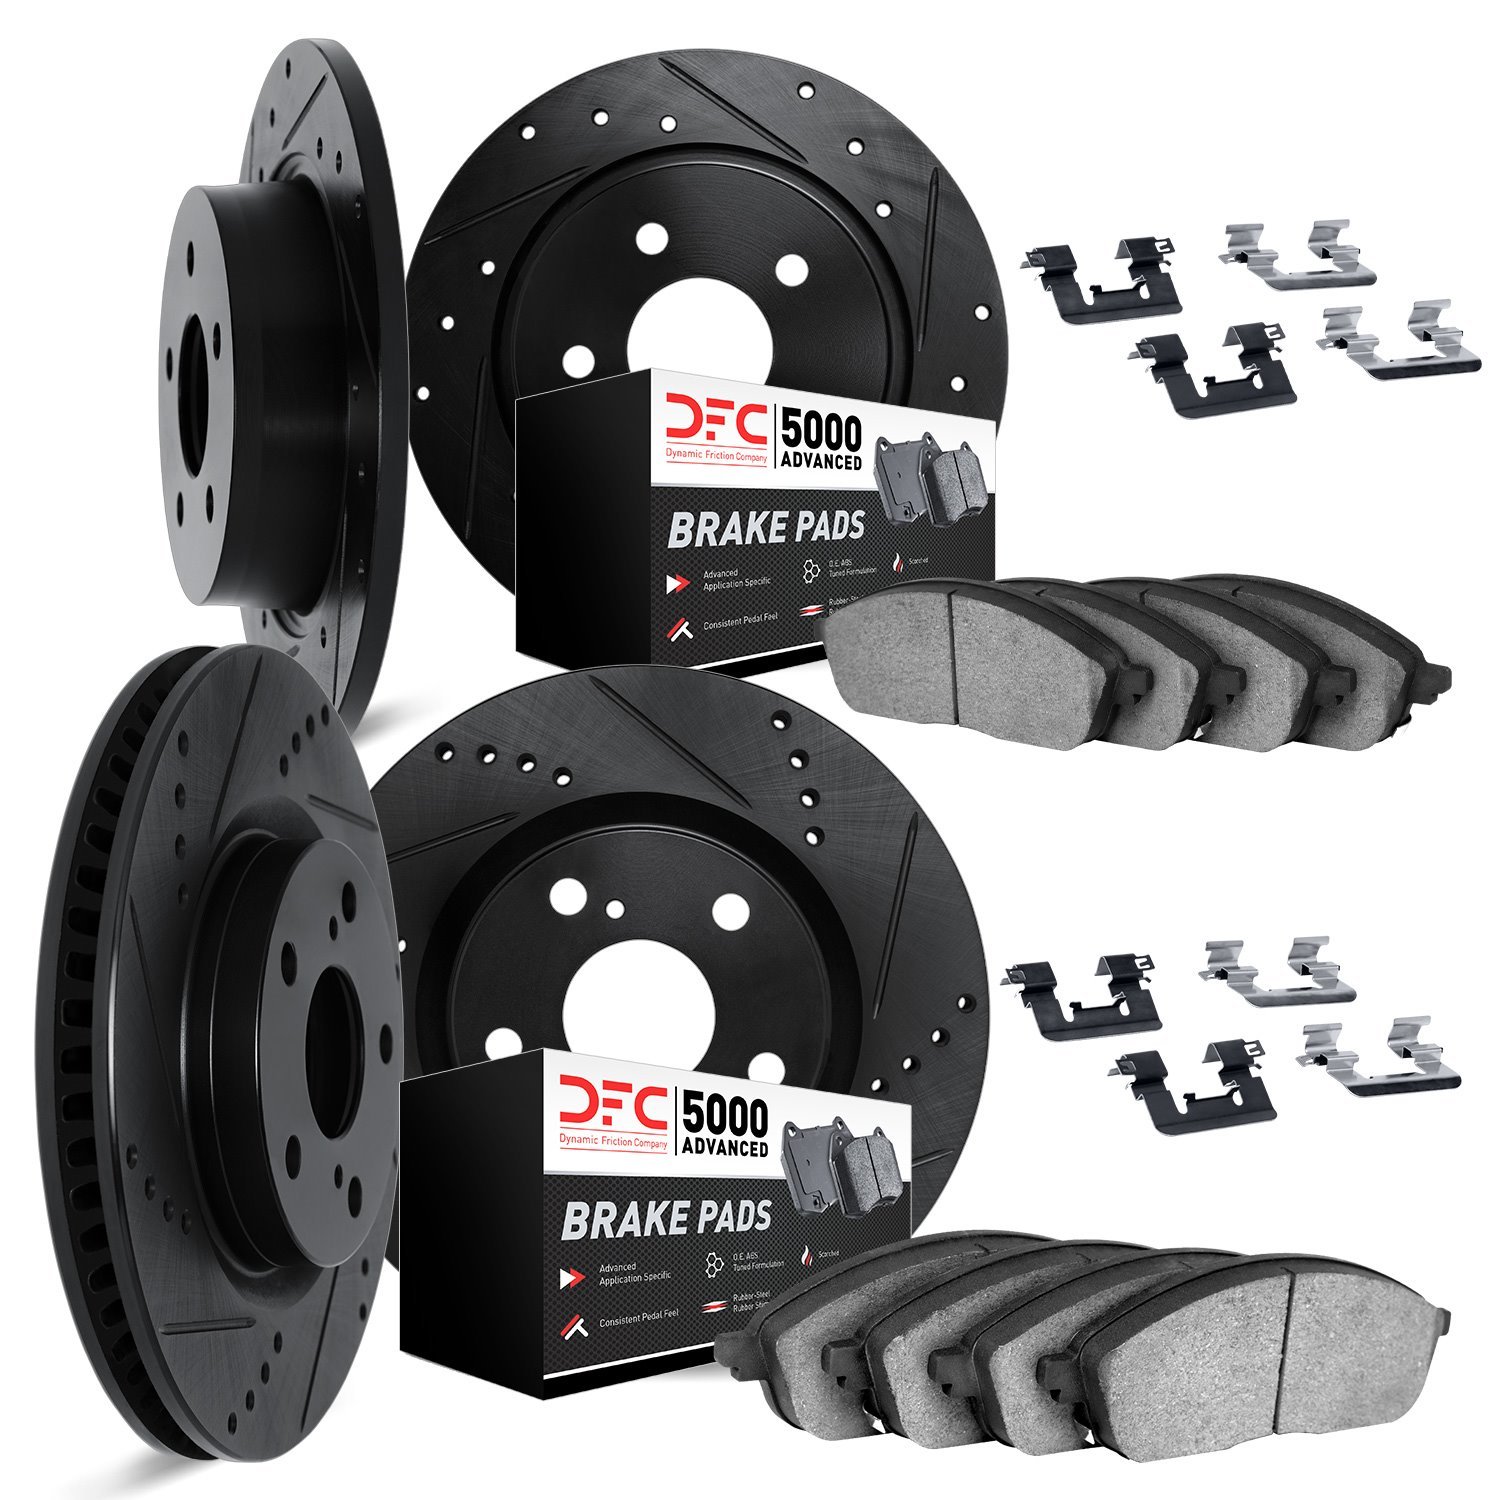 8514-42021 Drilled/Slotted Brake Rotors w/5000 Advanced Brake Pads Kit & Hardware [Black], Fits Select Mopar, Position: Front an